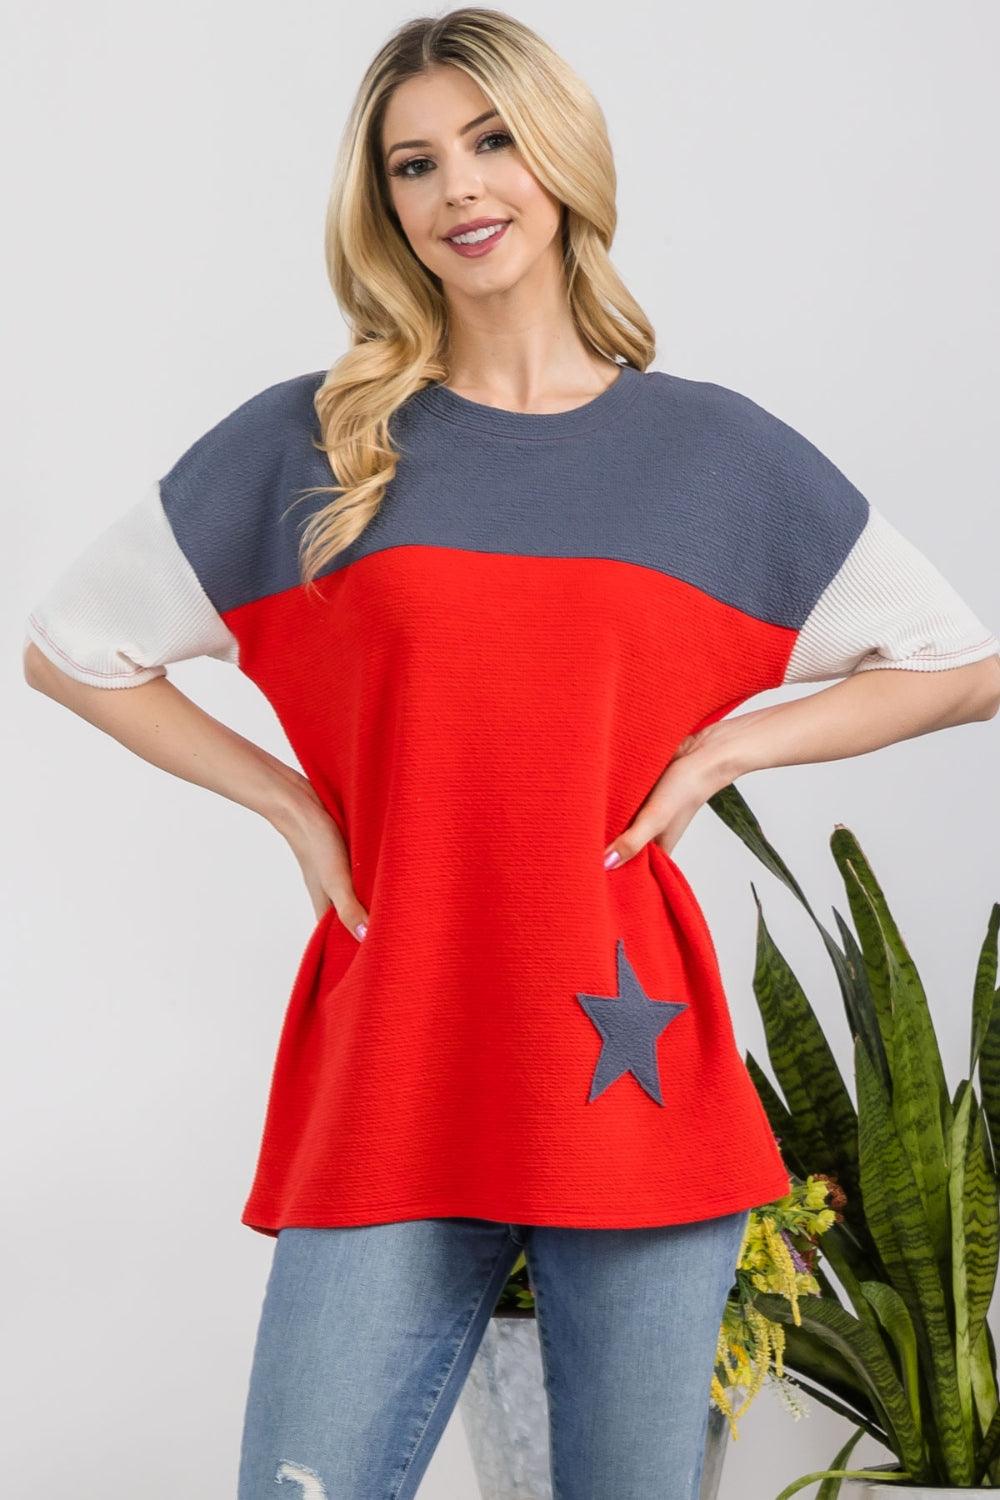 Women's Shirts Celeste Full Size Ribbed Star Color Block T-Shirt